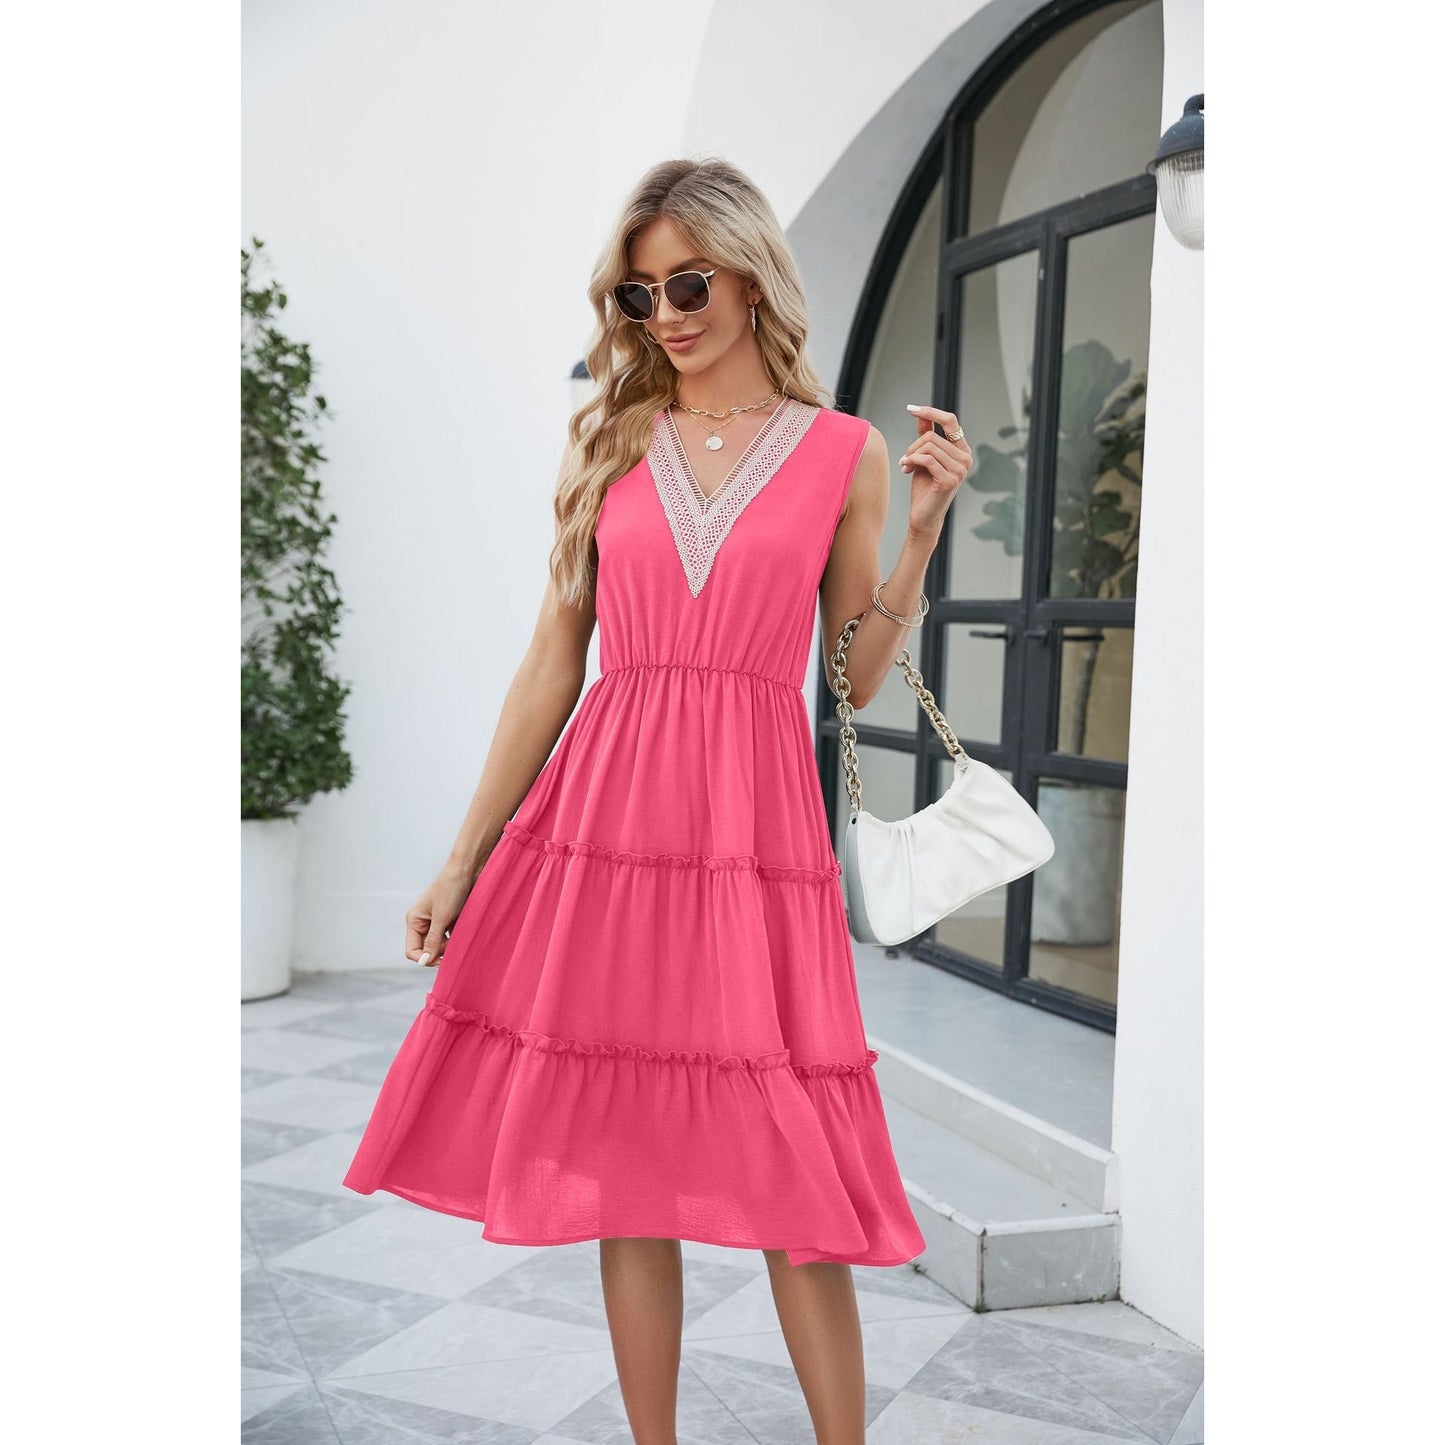 Buy Online Premimum Quality, Trendy and Highly Comfortable V-neck Women Sleeveless Pleated Ruffle Elegant Dress - FEYONAS